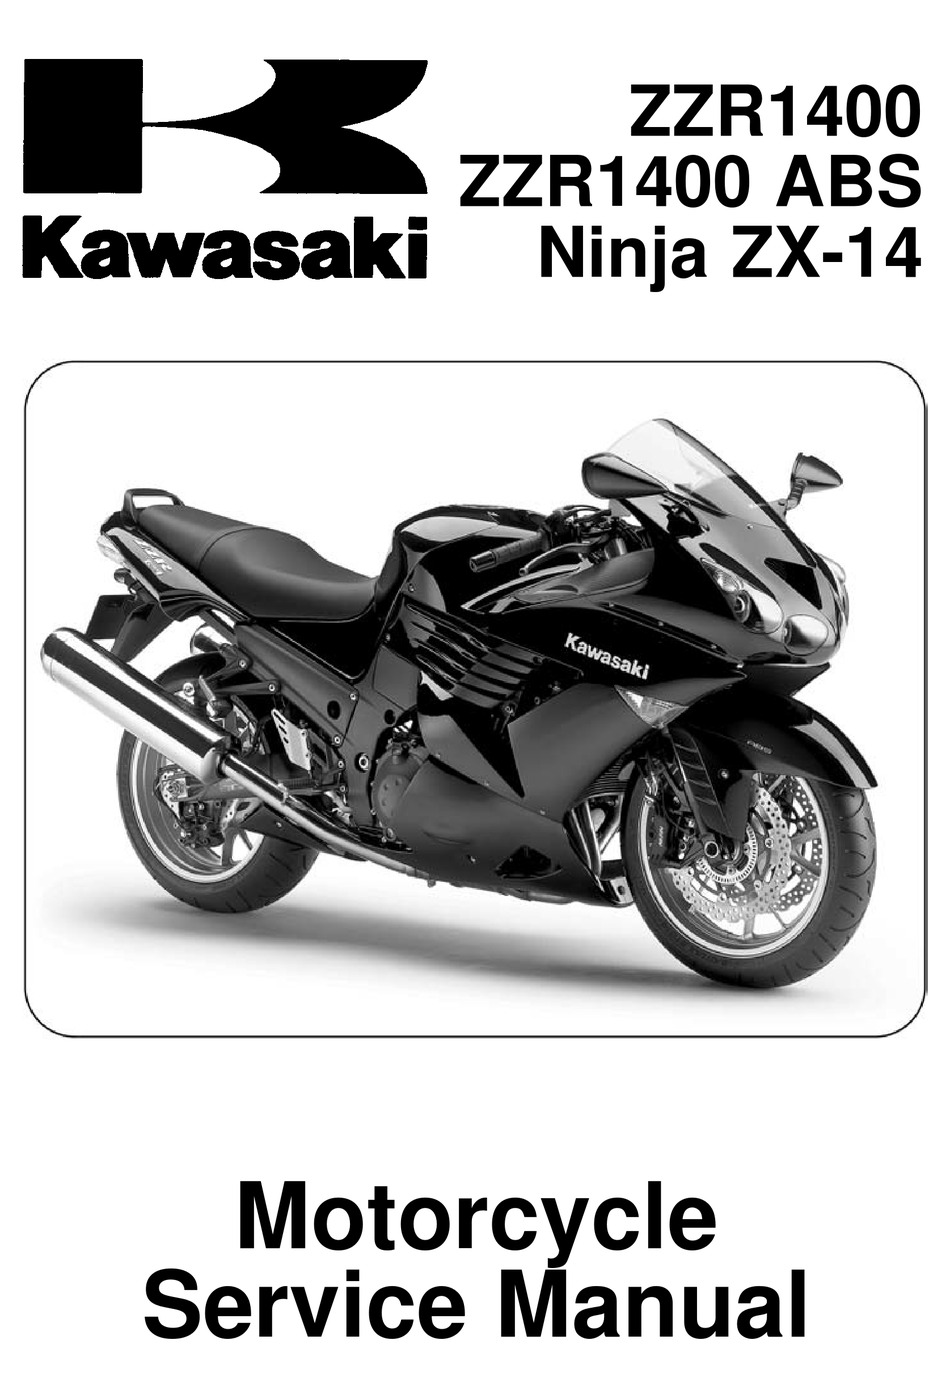 KAWASAKI ZZR1400 SERVICE MANUAL Pdf Download | ManualsLib